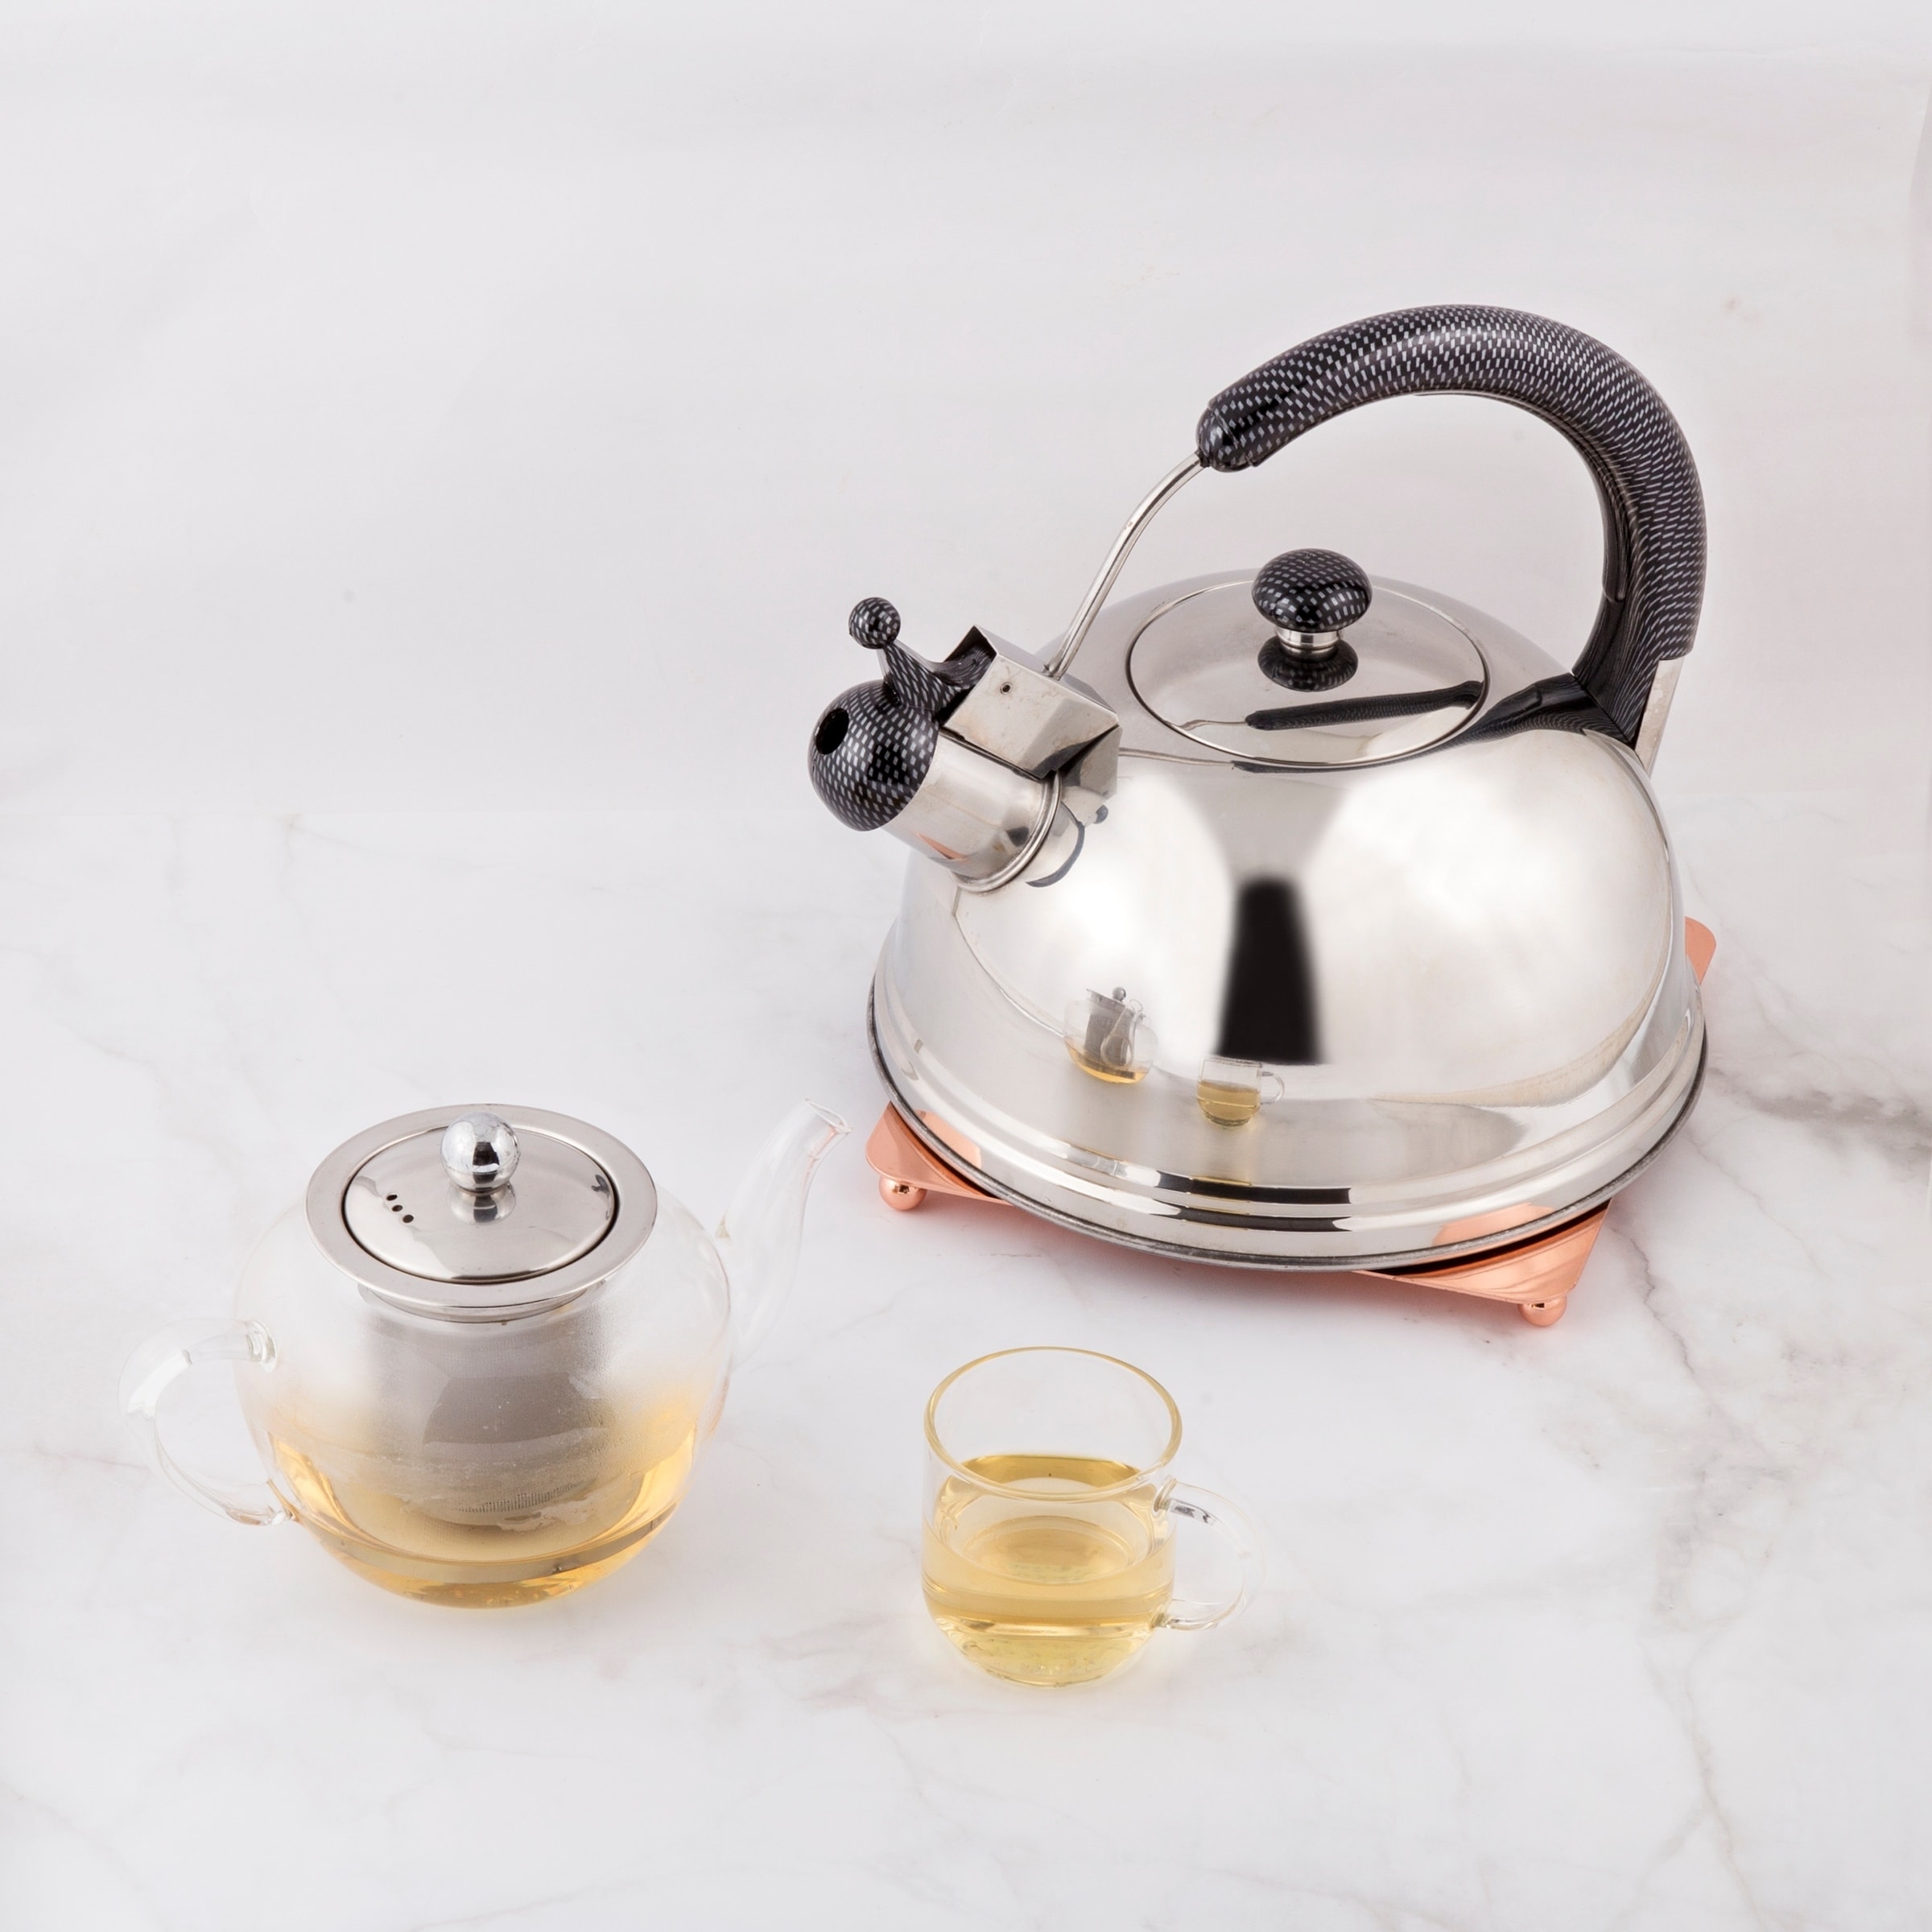 Tea Kettle Stovetop Whistling Kettle Teapot, Food Grade Stainless Steel  Teakettle for Stove Top with Heat Proof Ergonomic Handle, 3.1 Quart Tea Pot